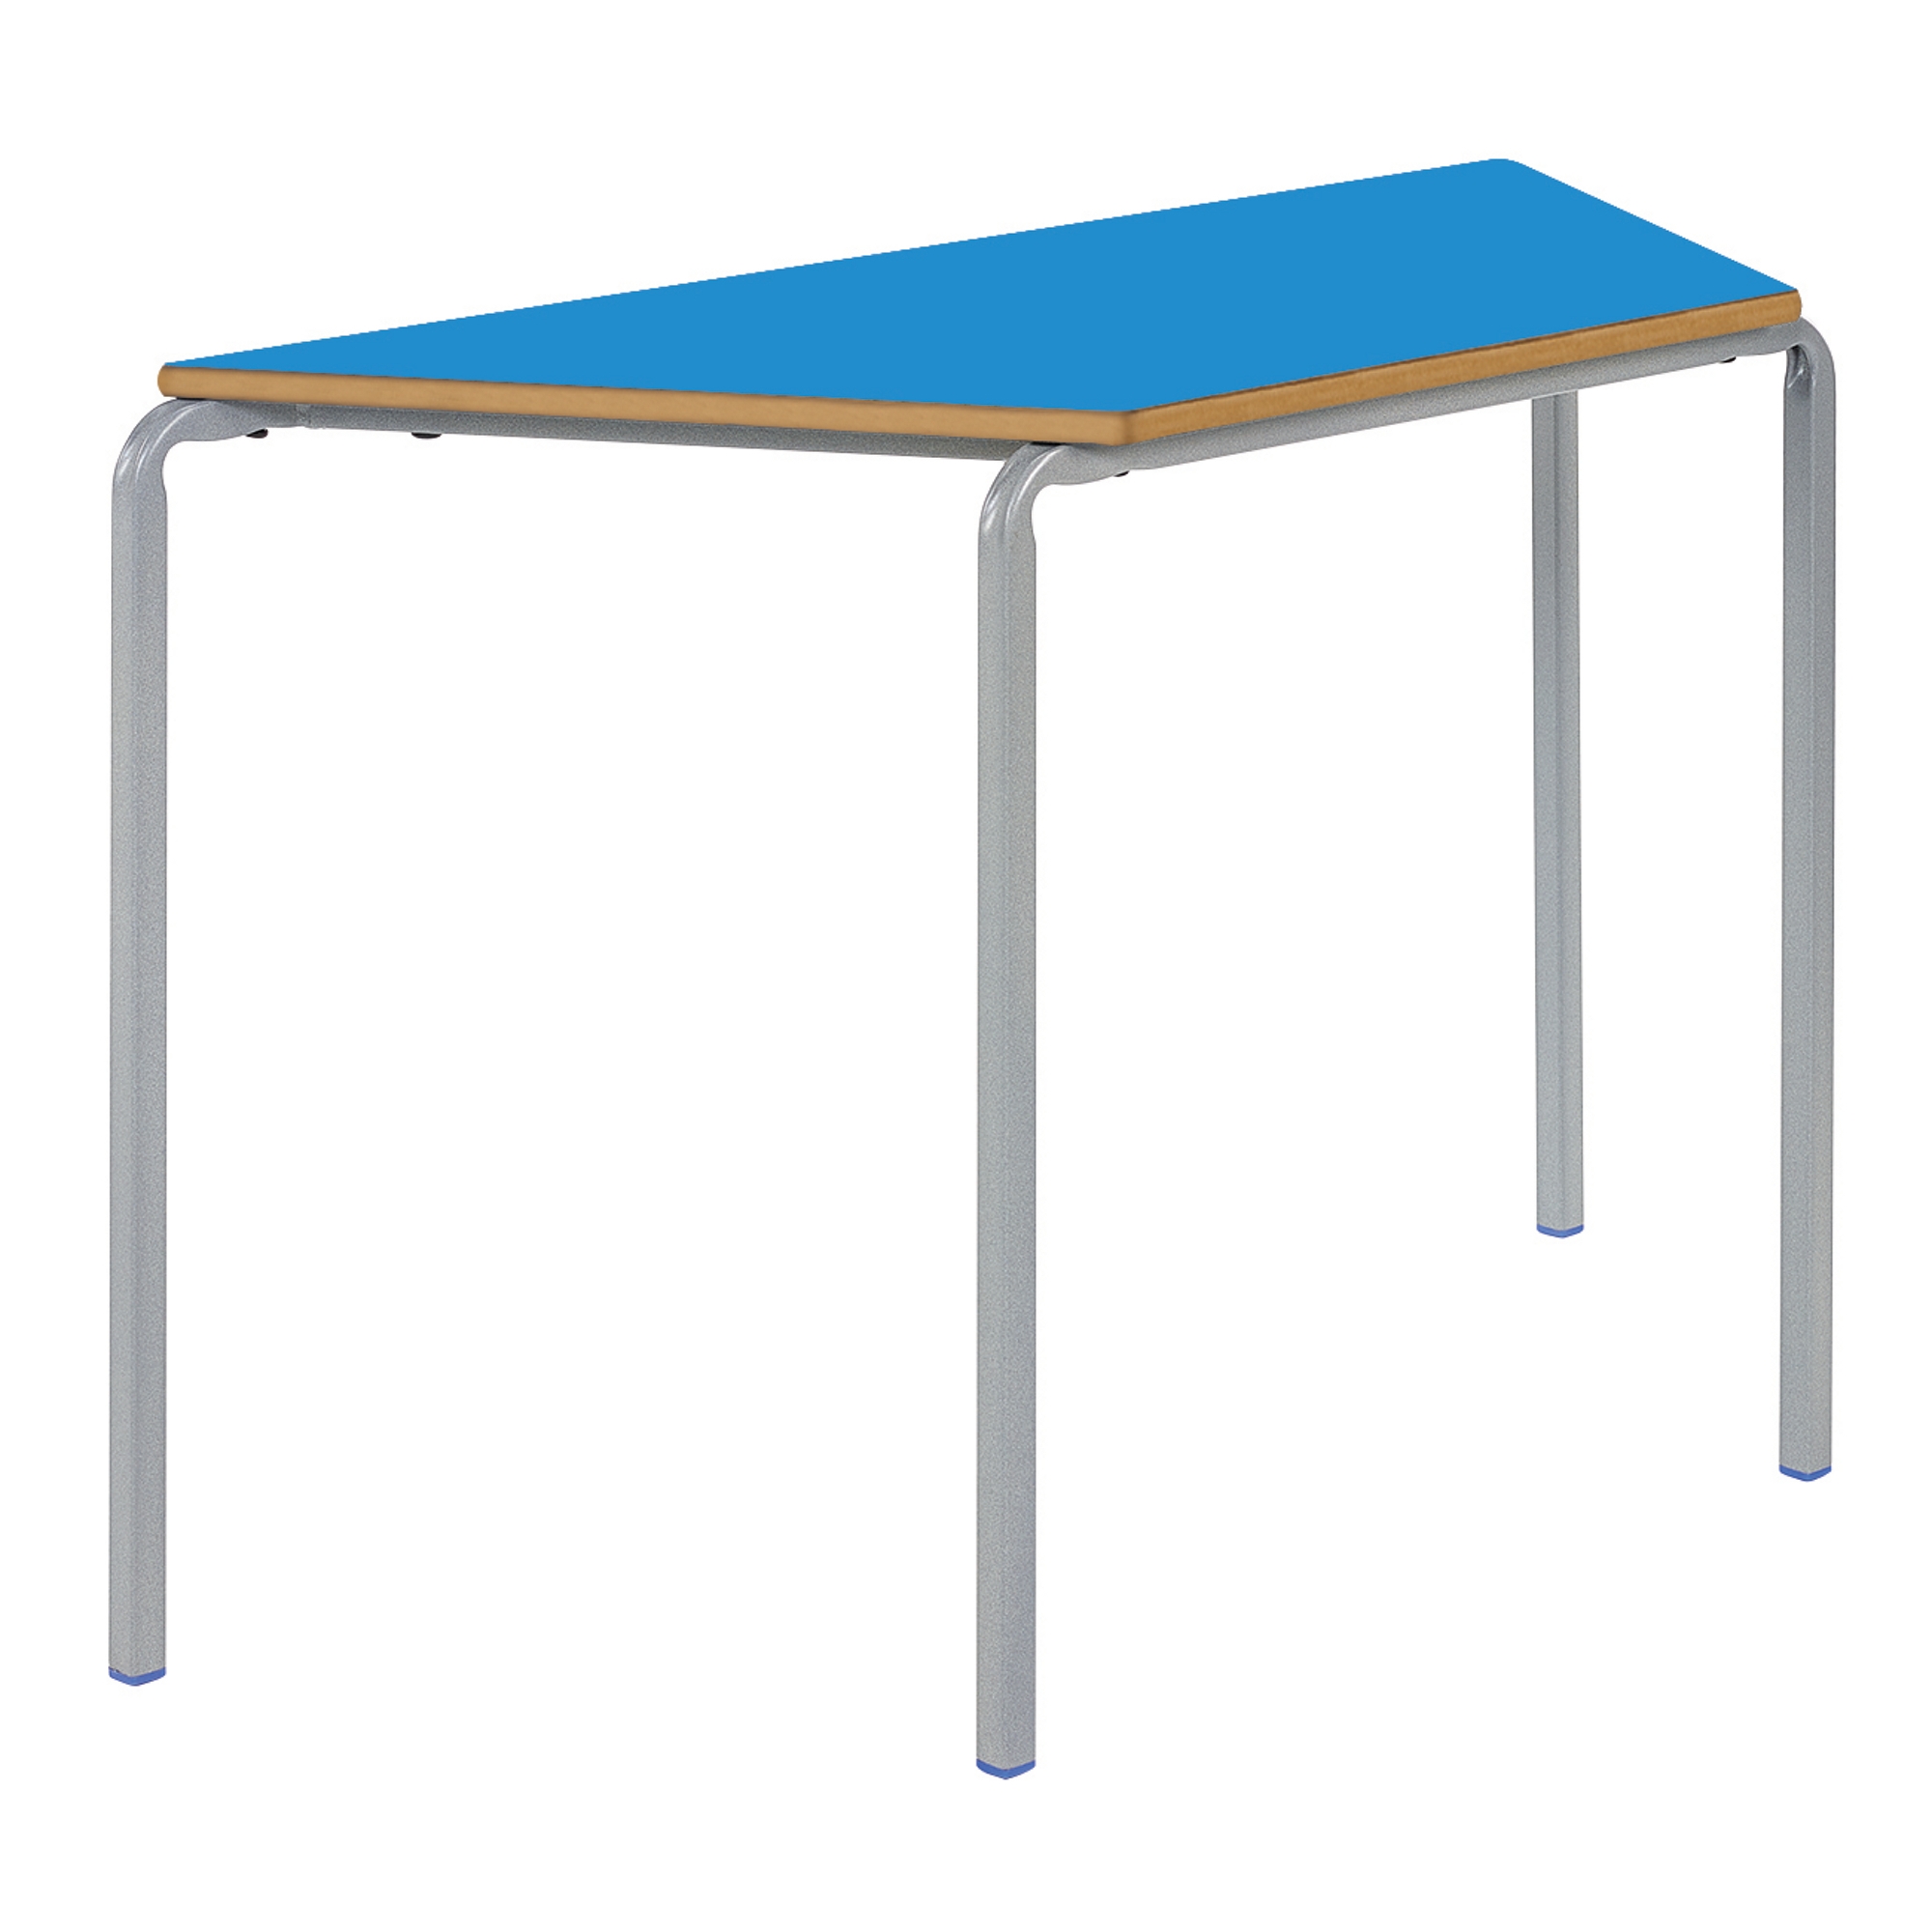 Classmates Trapezoidal Crushed Bent Classroom Table - 1100 x 550 x 530mm - Blue